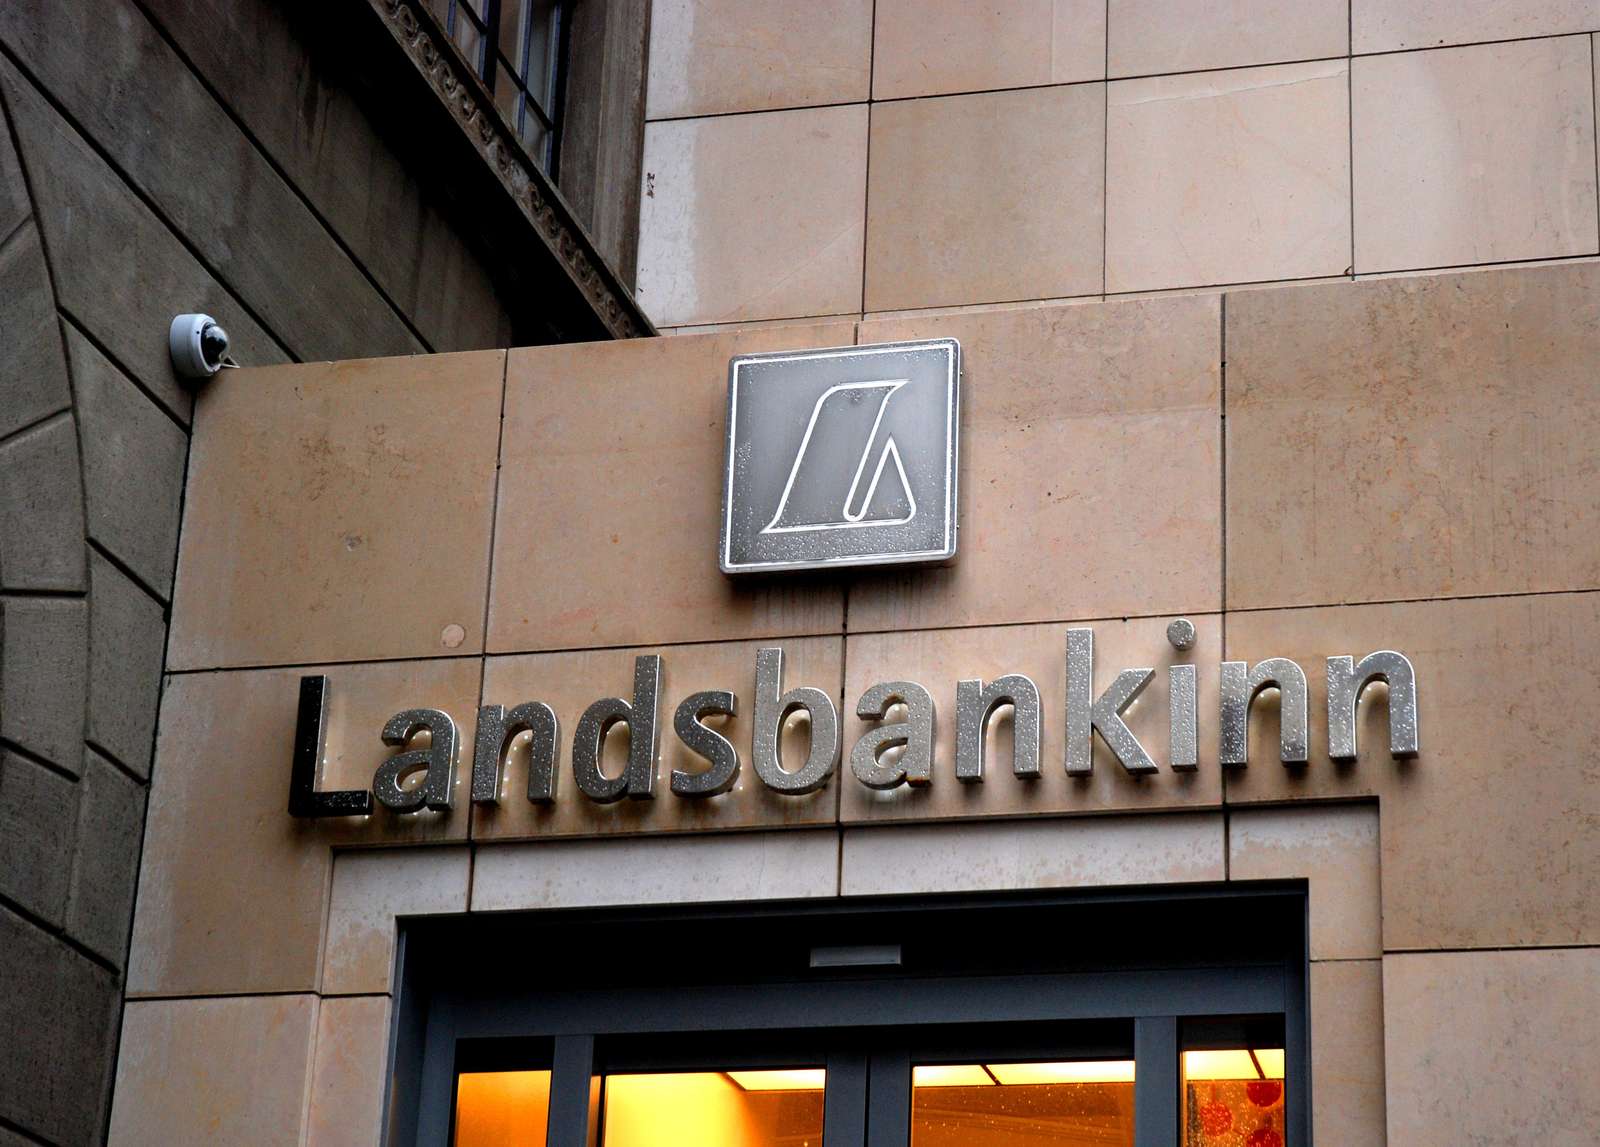 Landsbankinn (National bank)